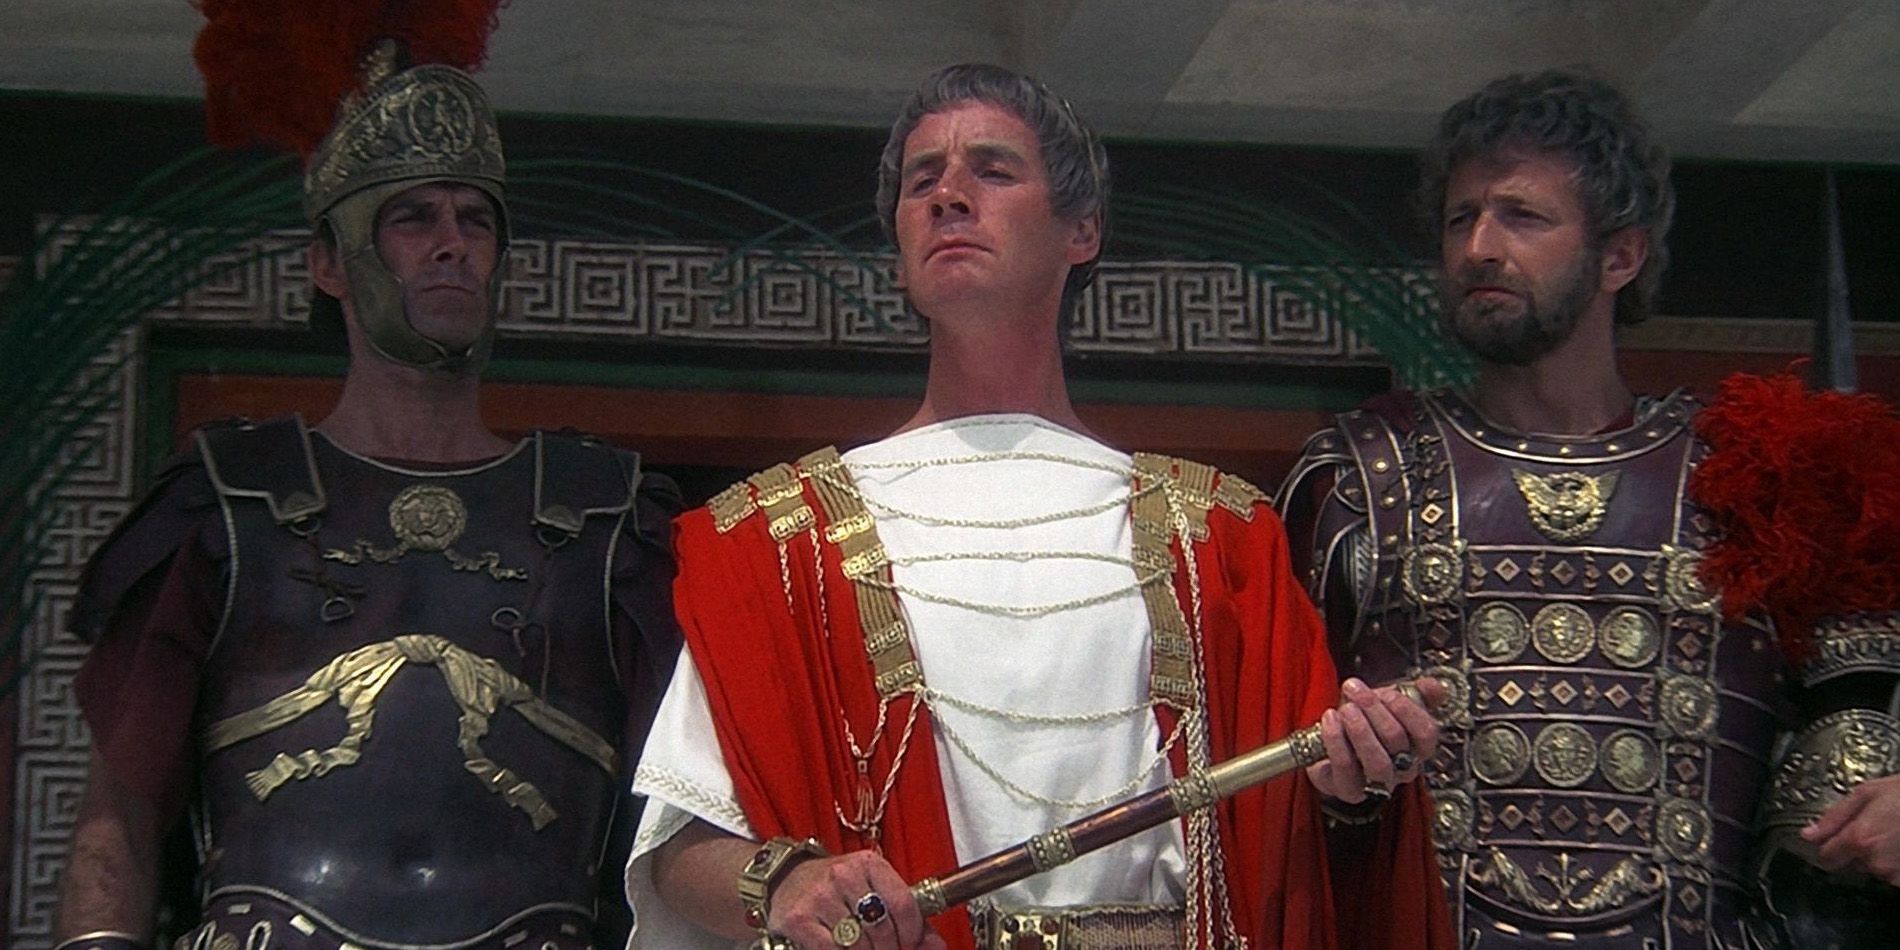 Pontius Pilate looking arrogant in The Life of Brian